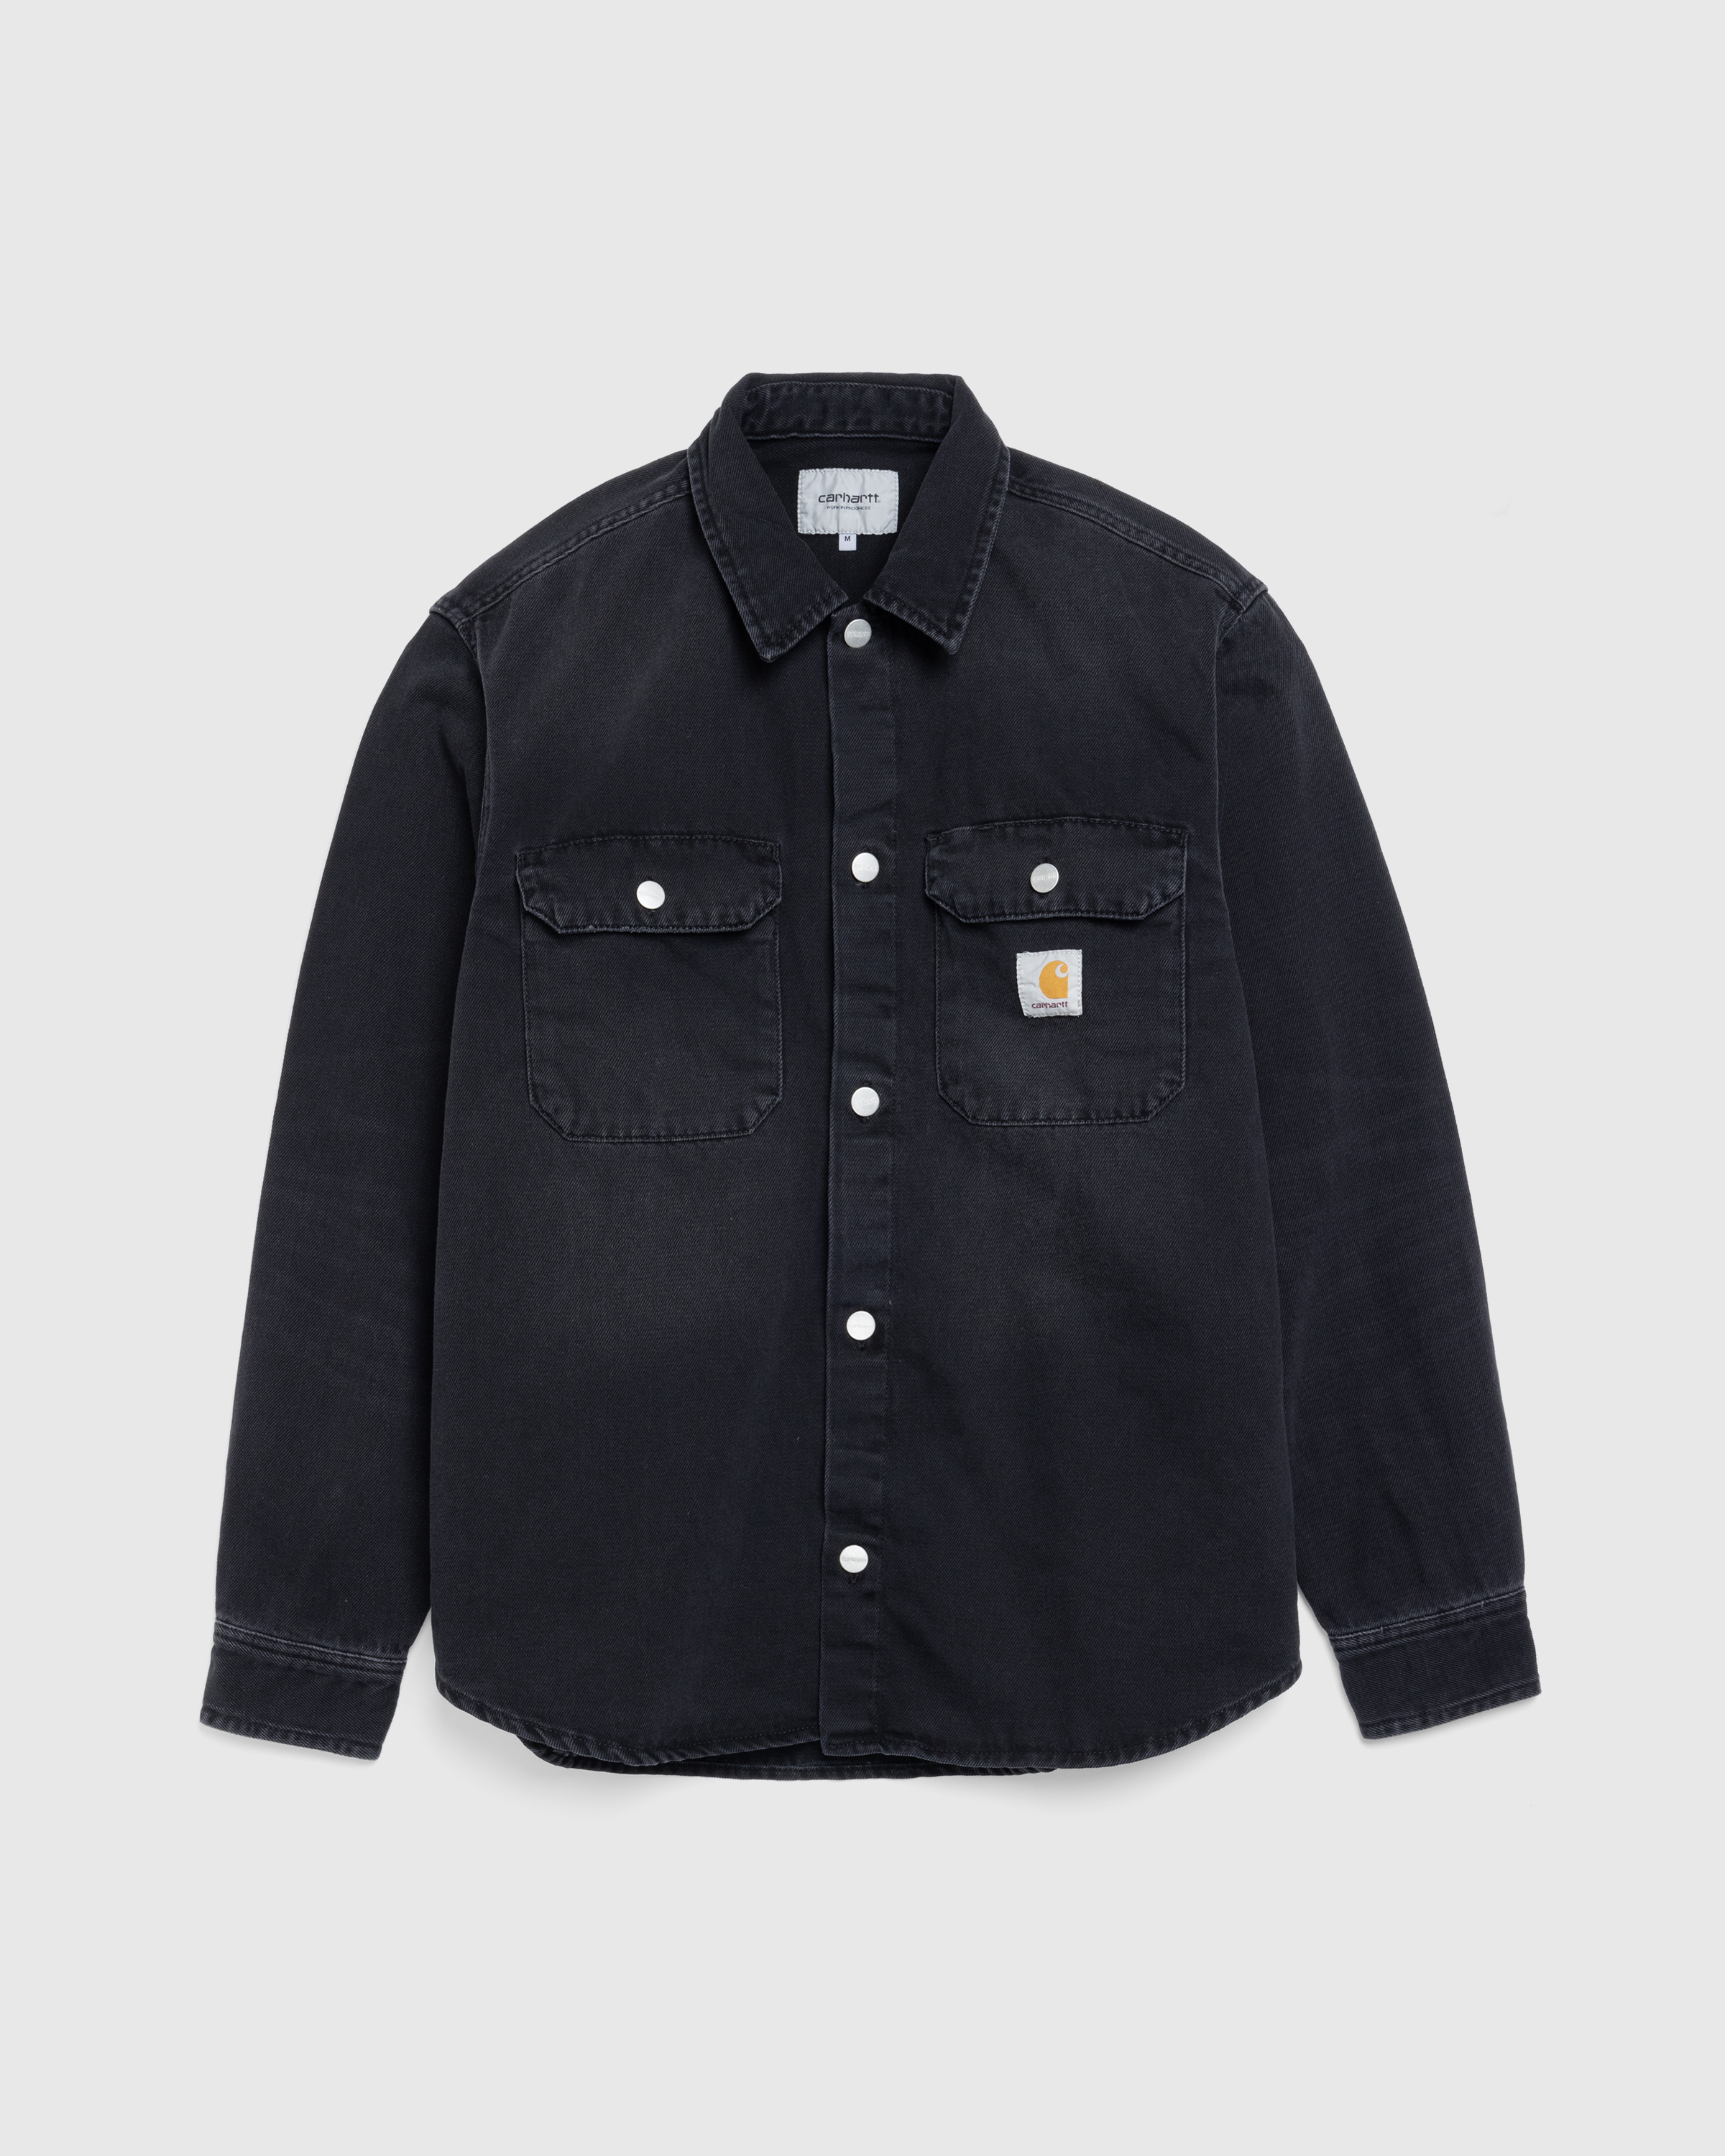 Carhartt WIP – Harvey Shirt Jacket Black/Dark Used Wash - Shirts - Black - Image 1